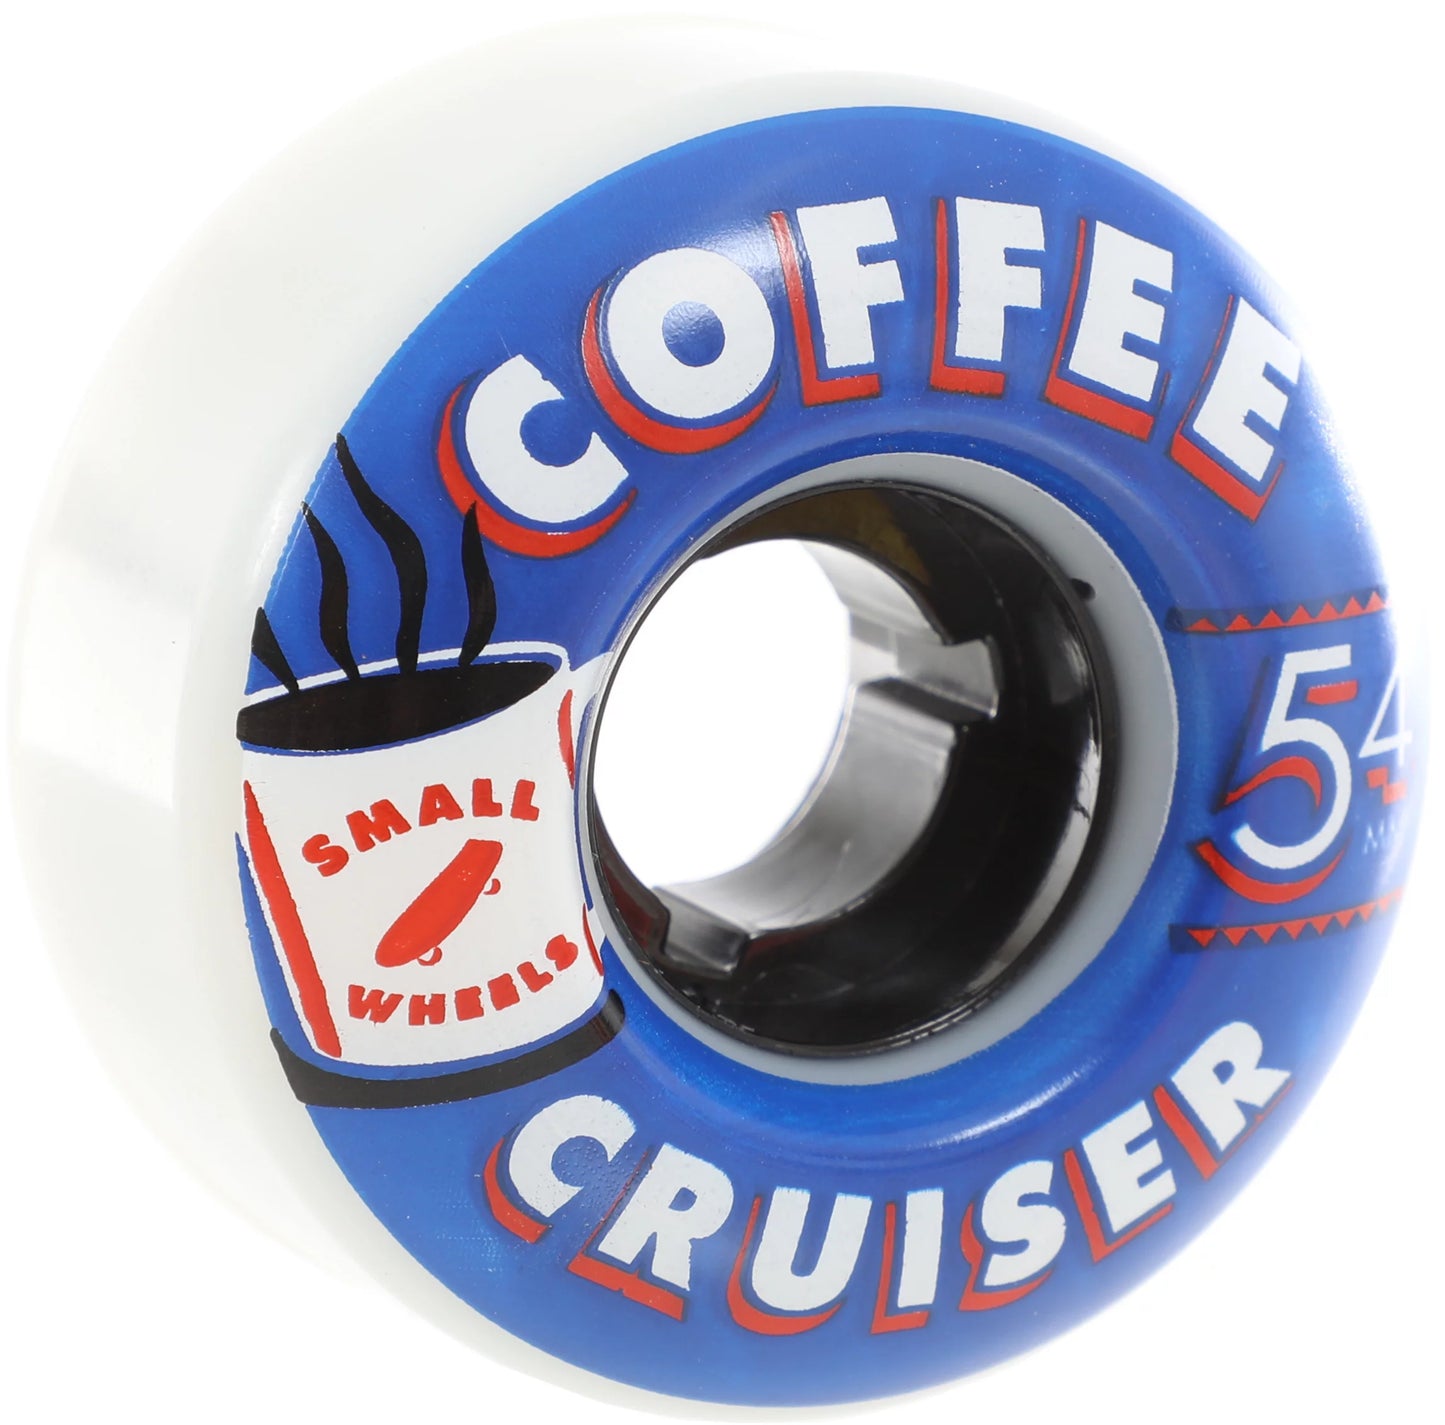 SML Coffee Cruiser Blue Heat 54mm 78a